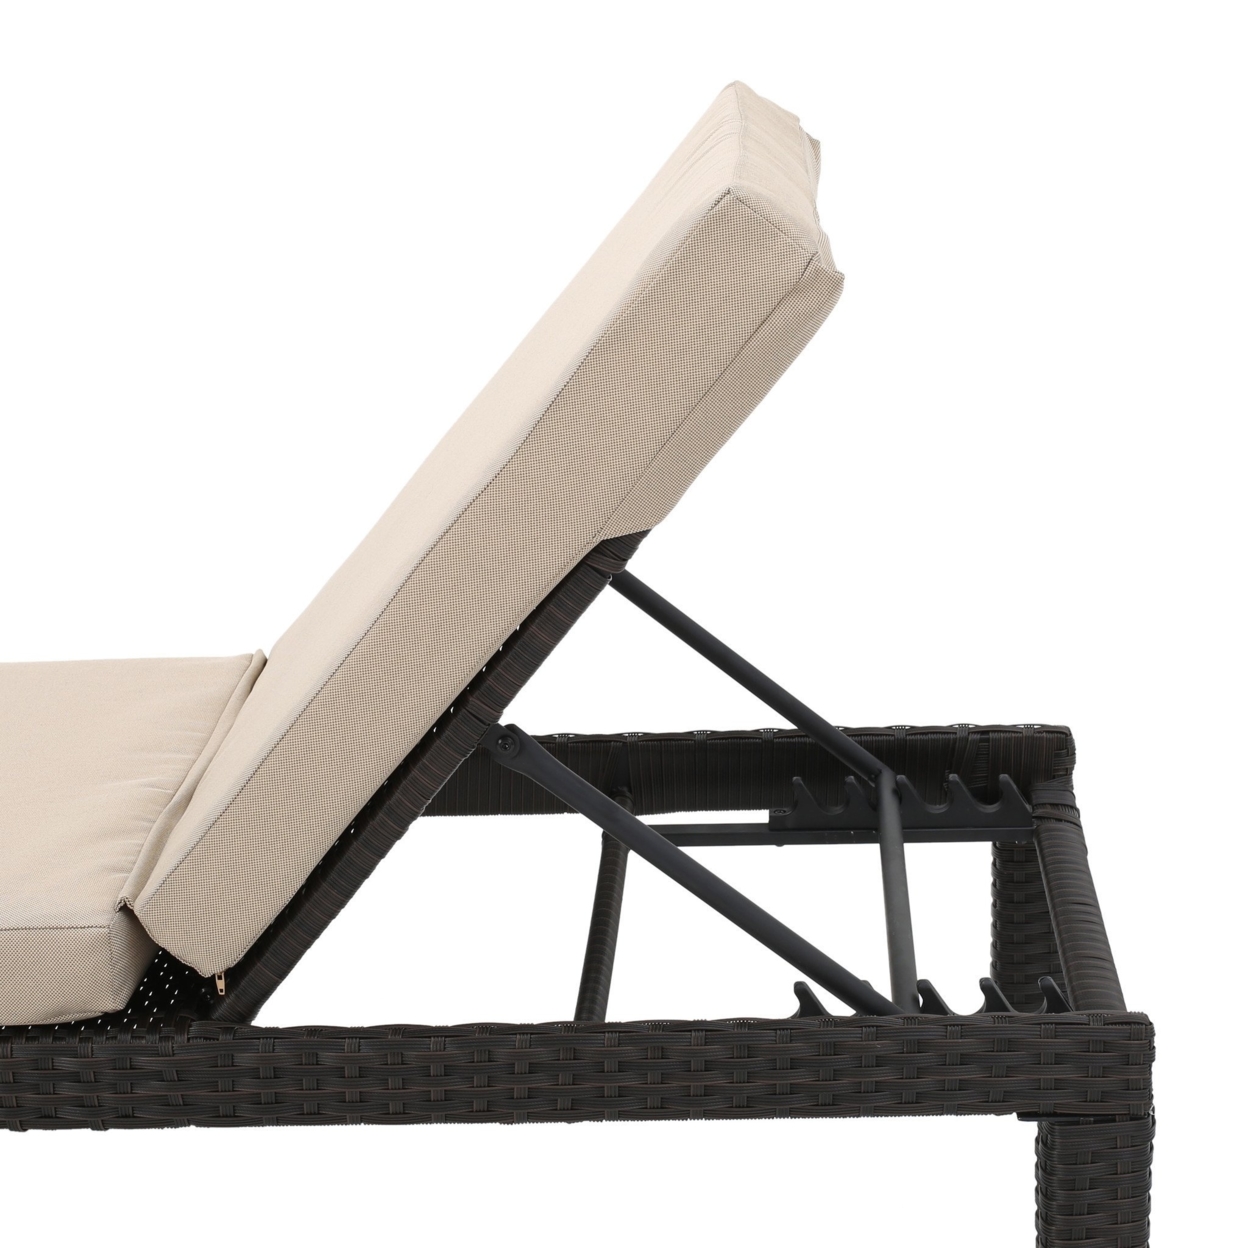 Budva Outdoor Wicker Adjustable Chaise Lounge With Cushion - Black/Gray, Single